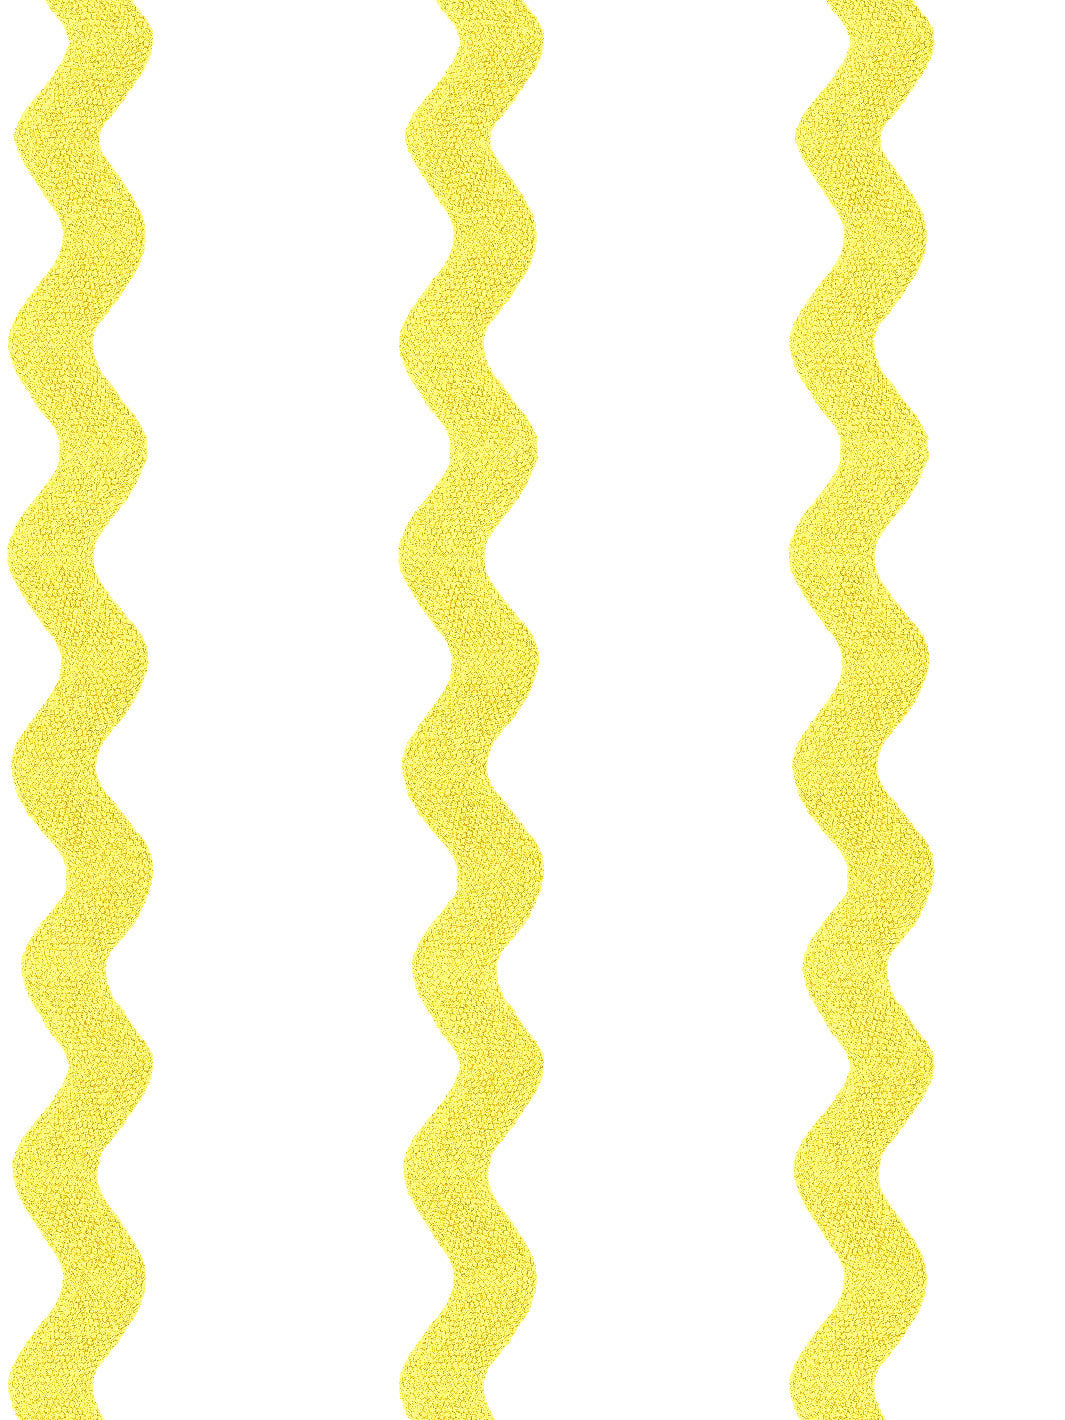 'Ric-Rac Stripe on White' Wallpaper by Sarah Jessica Parker - Lemon Drop